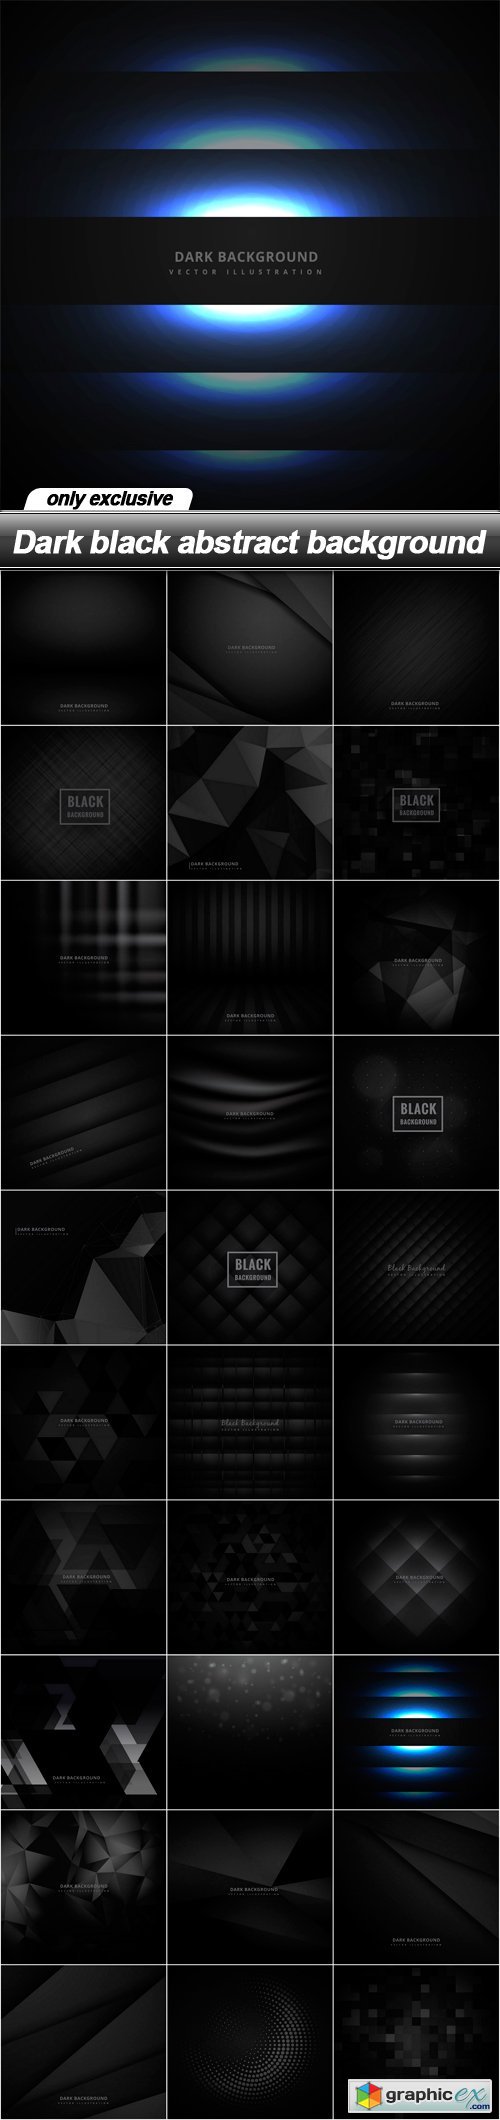 Dark black abstract background - 30 EPS